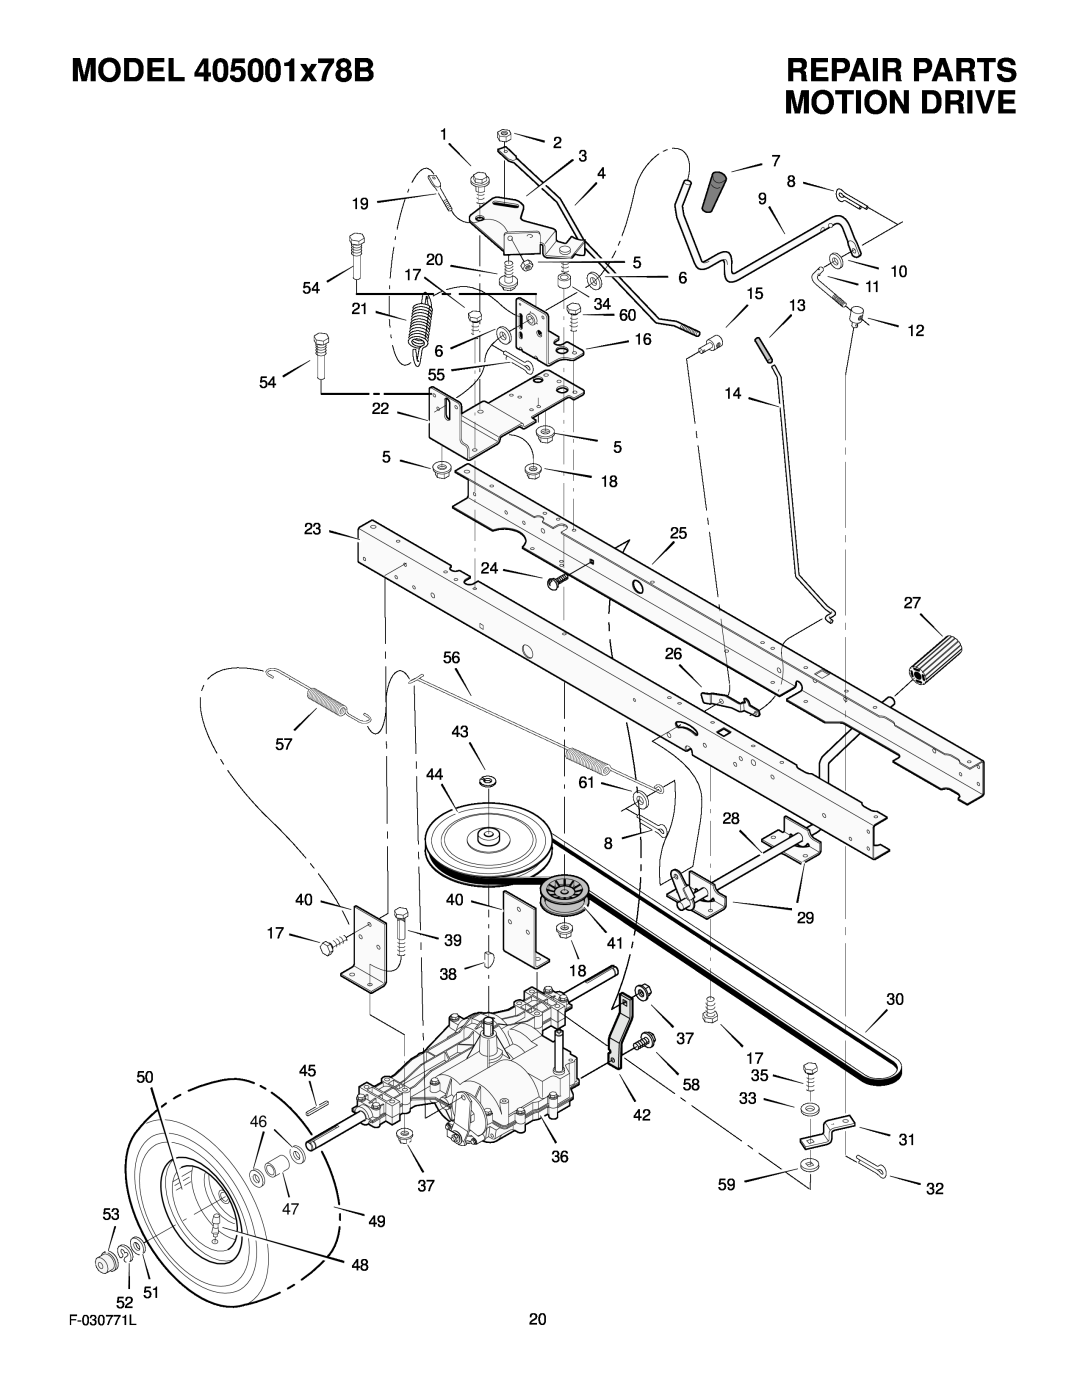 Murray manual Motion Drive, Repair Parts, MODEL 405001x78B 